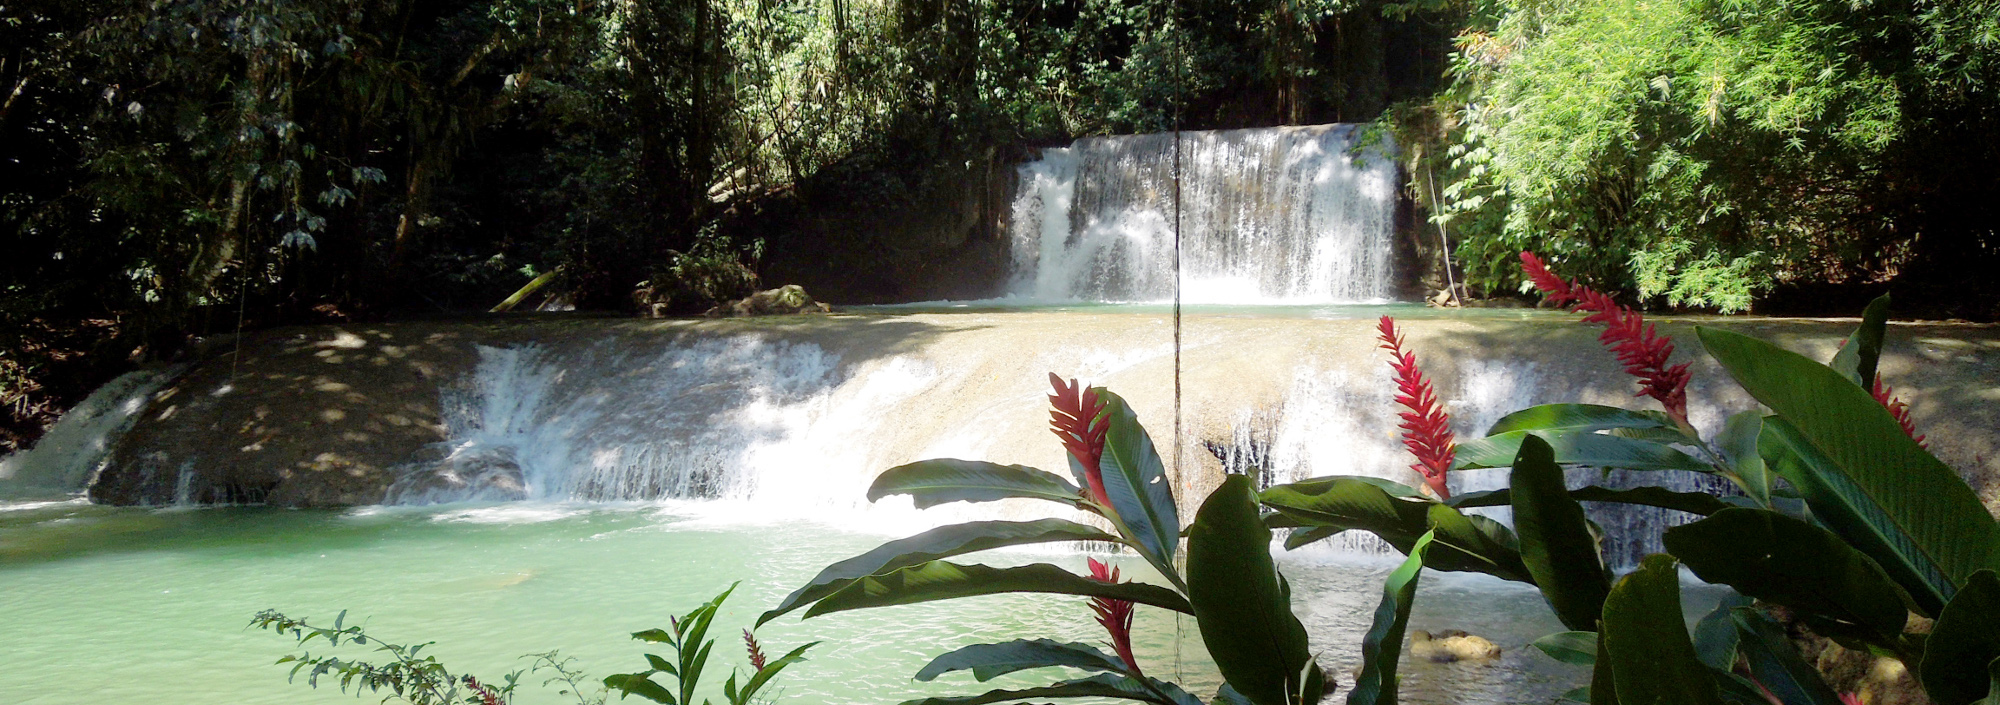 YS-Wasserfall an der Südküste Jamaicas